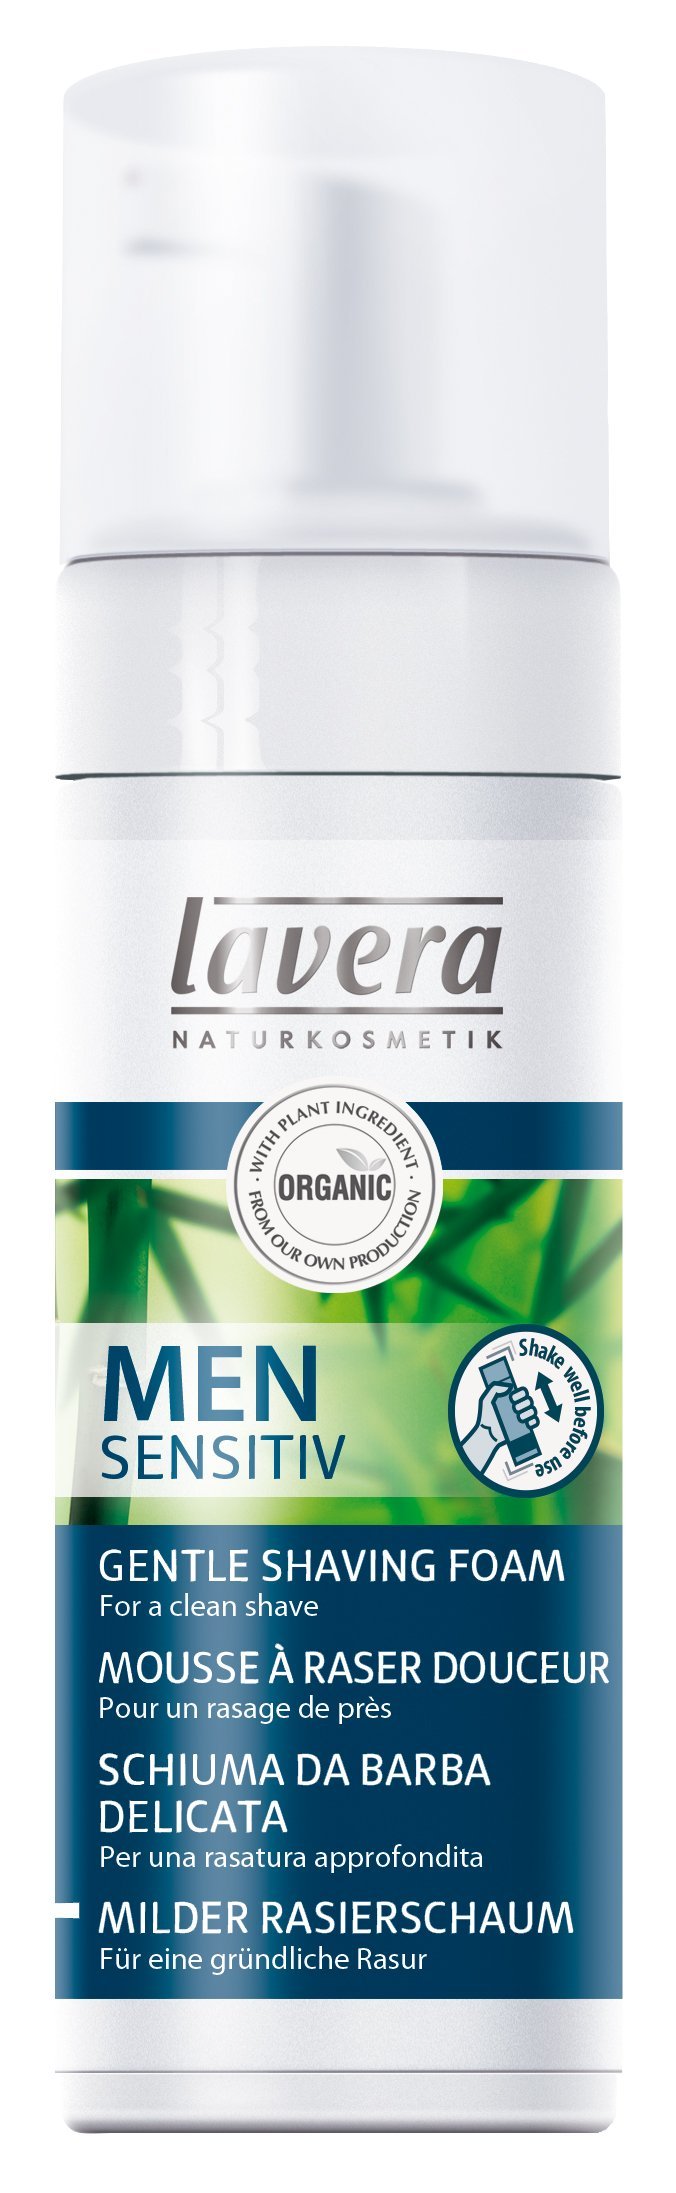 [Australia] - lavera Men Sensitiv Smooth Shaving Foam ∙ For a clean shave ∙ Vegan ✔ Organic Skin Care ✔ Natural & Innovative Cosmetics ✔ 150ml 